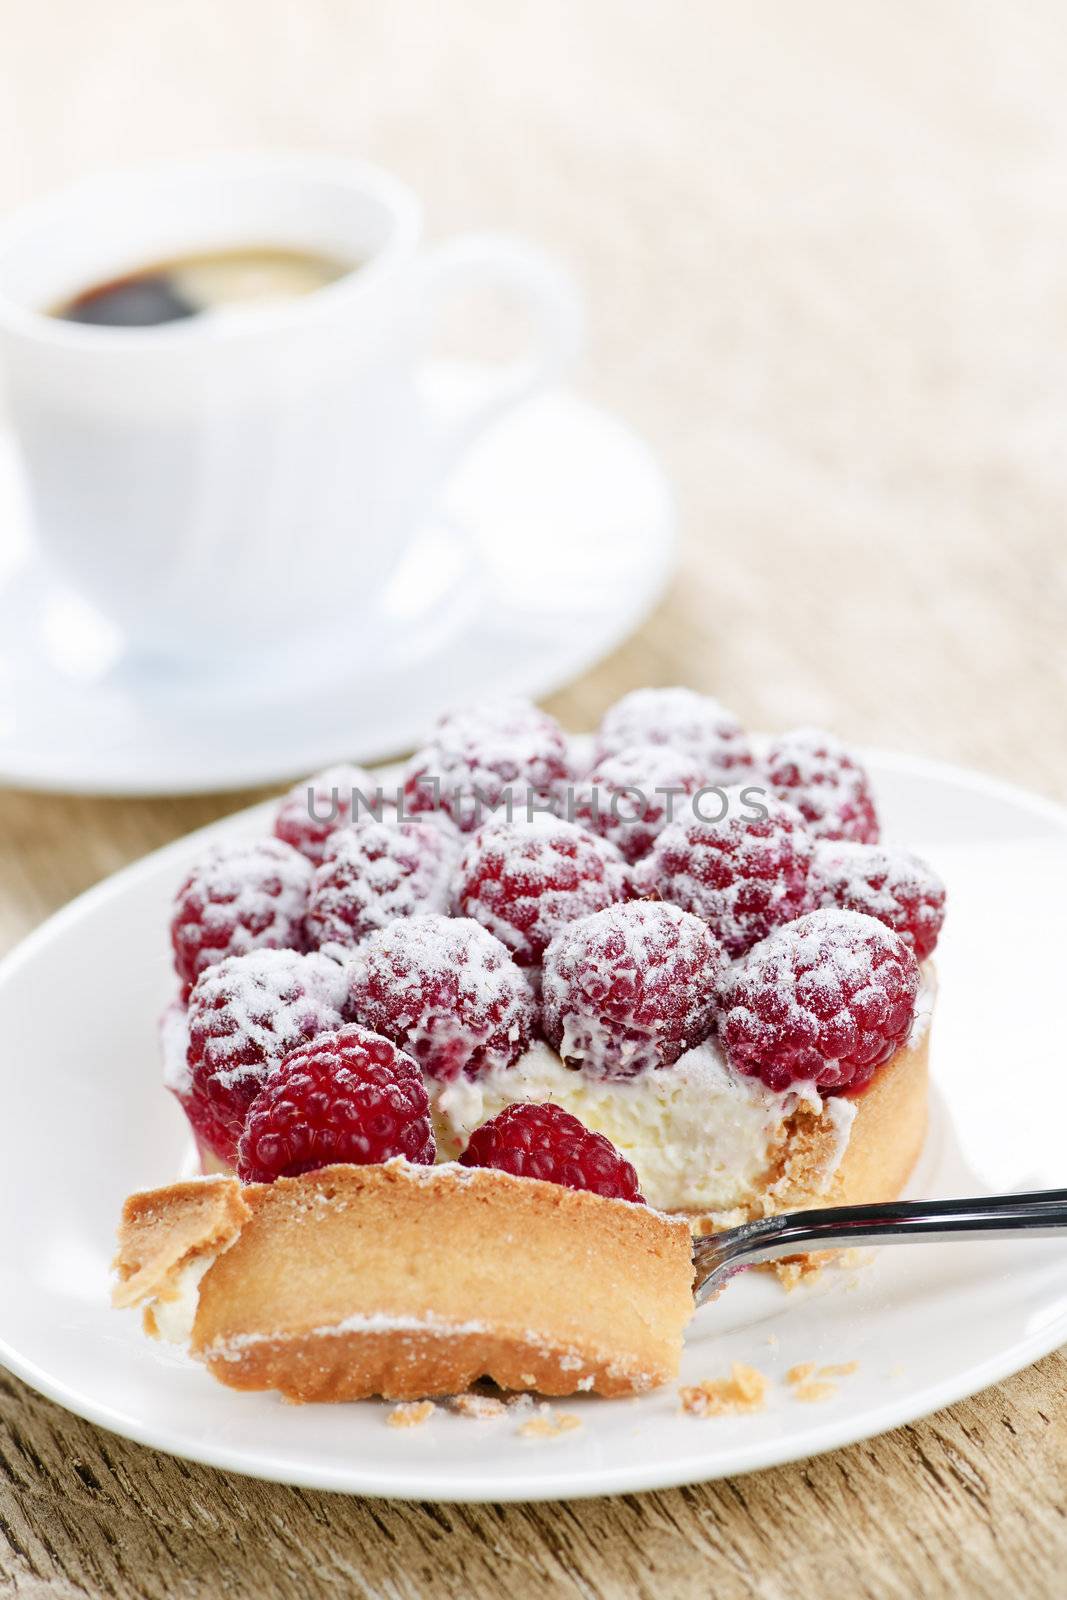 Raspberry tart with coffee by elenathewise